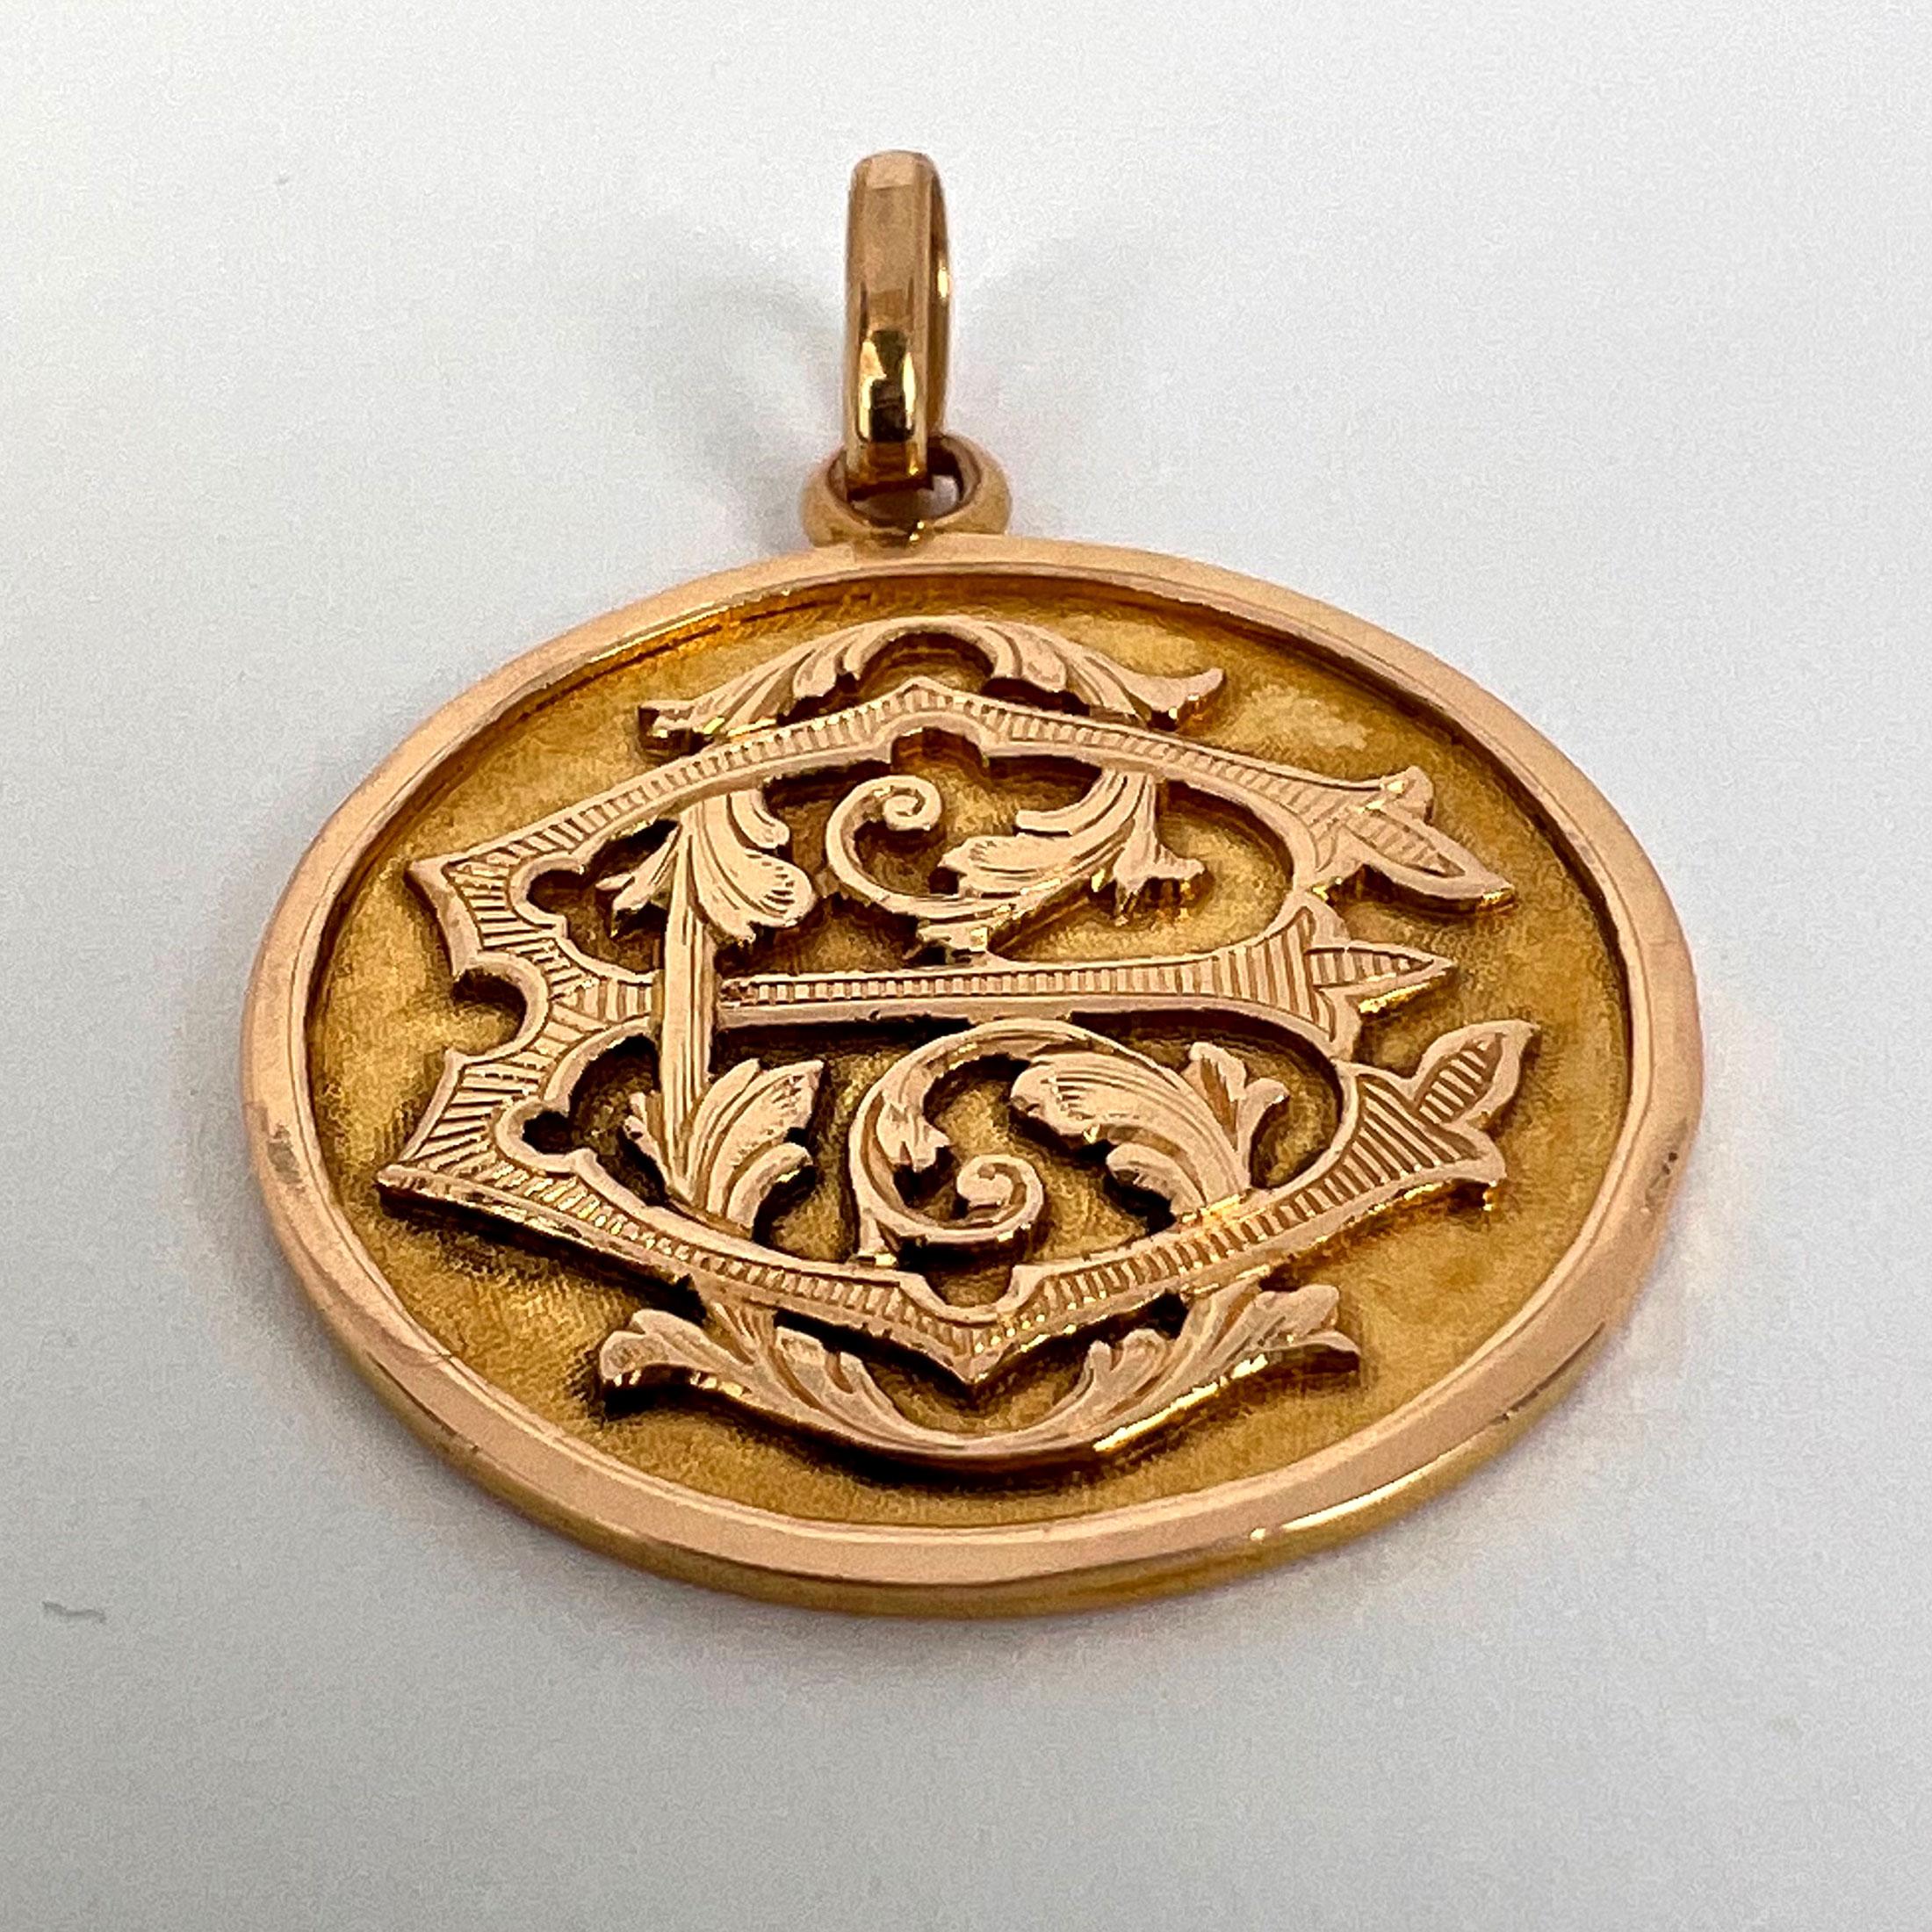 French 18k Rose Gold EC or CE Monogram Medal Pendant For Sale 11